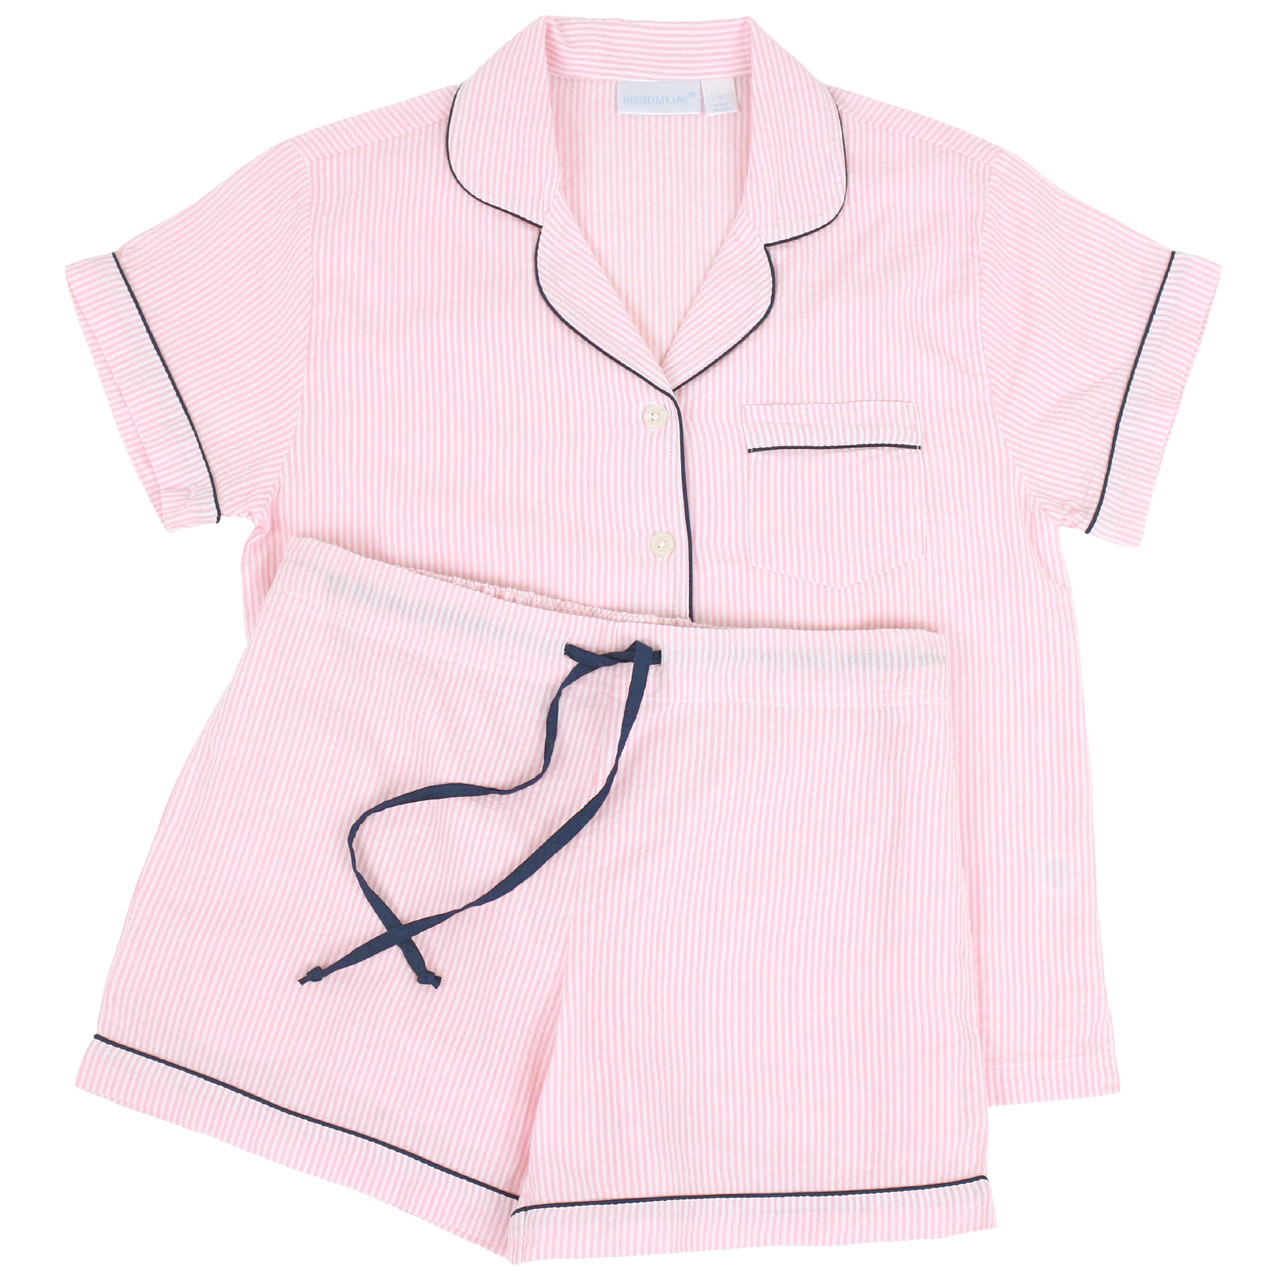 https://cdn11.bigcommerce.com/s-yhcob5xr/images/stencil/1280x1280/products/1336/2727/Pink-Seersucker-Navy-womens-cotton-short-sleeve-shorty-pajama-set-F__67144.1651079877.jpg?c=2